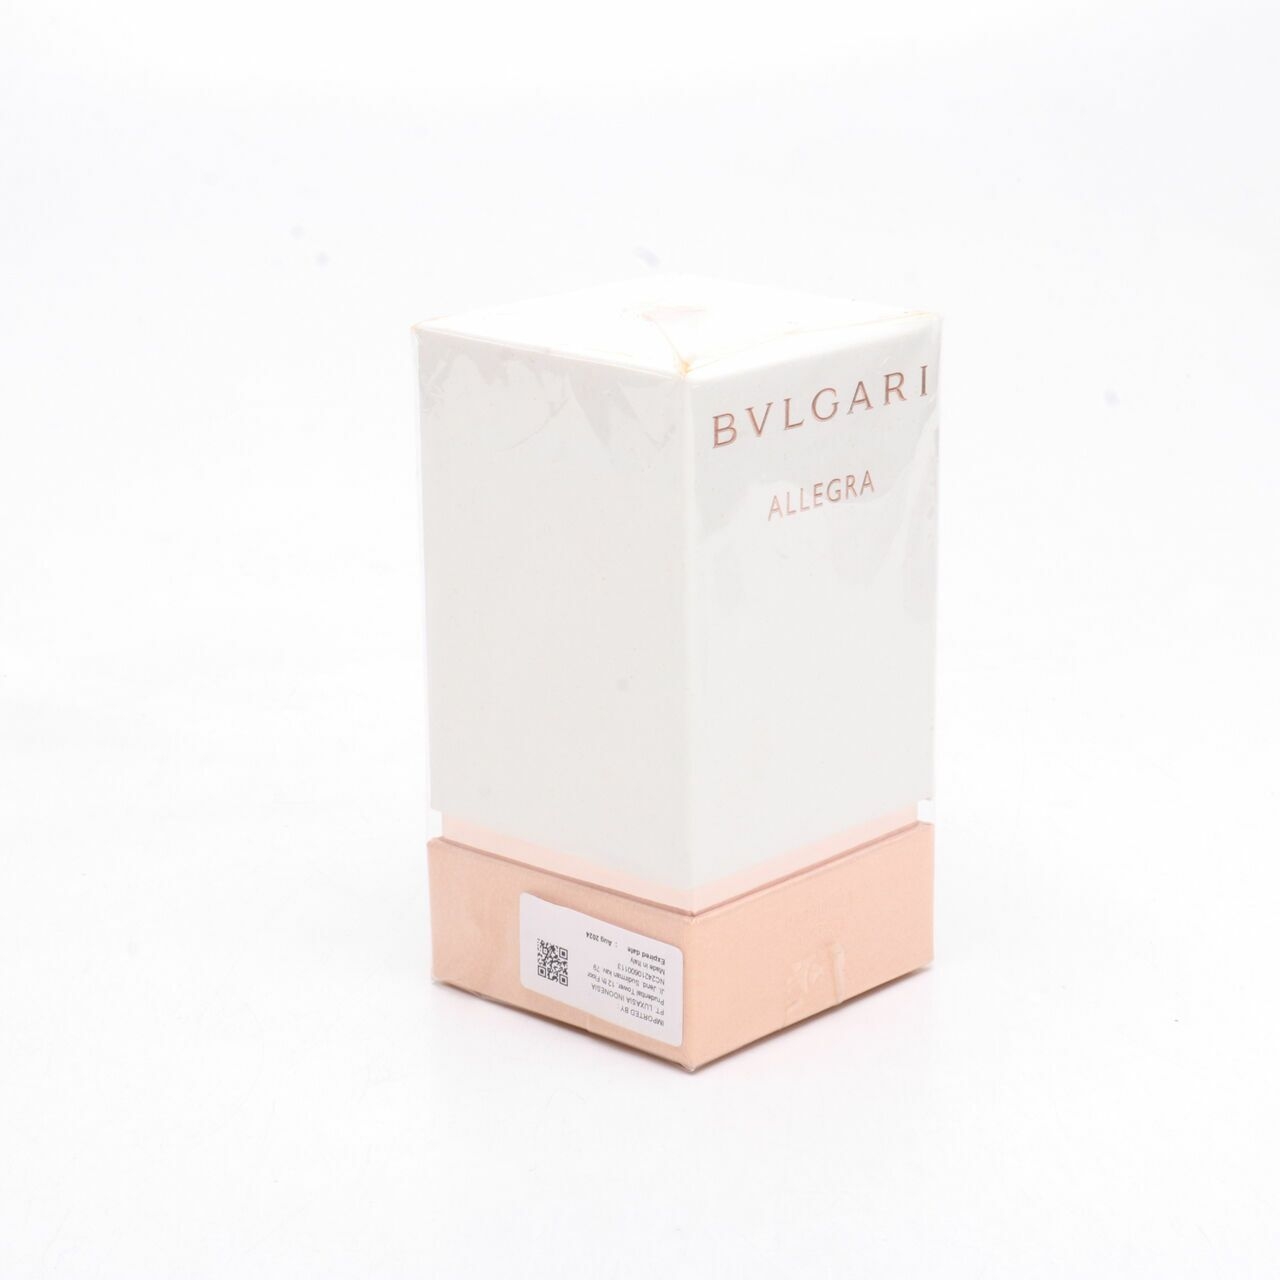 Bvlgari Allegra Magnifying MYRRH Essence Eau de Parfum Fragrance